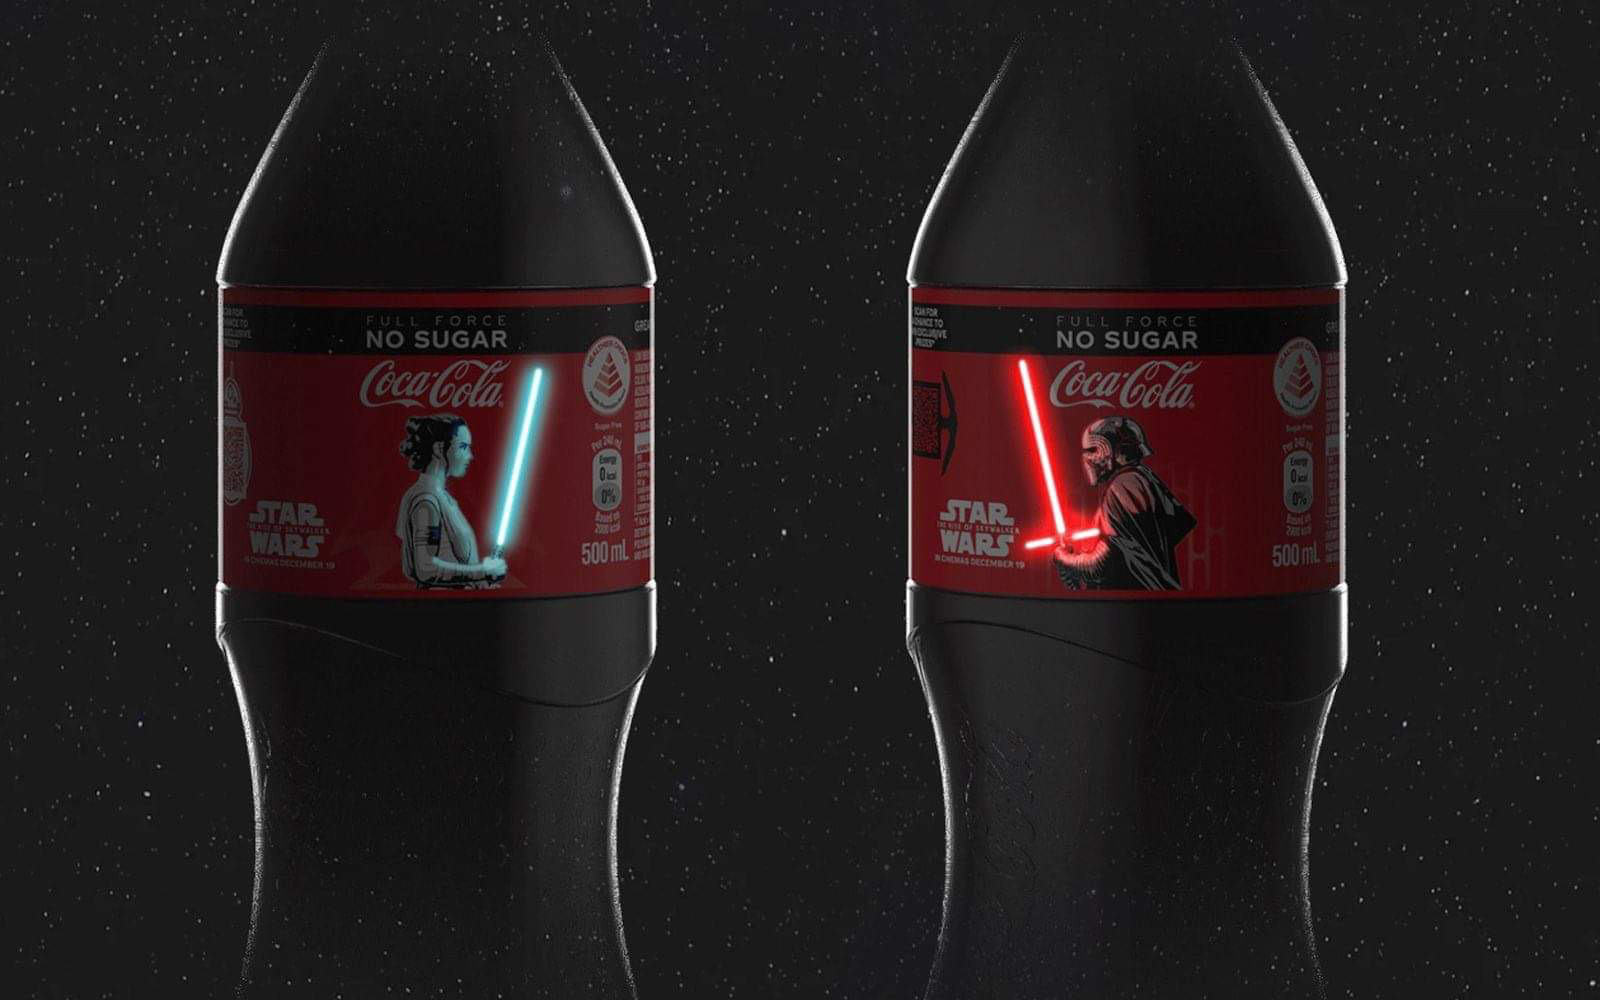 Coca-Cola releasing “Star Wars” Coke bottles featuring Lightsaber Battles